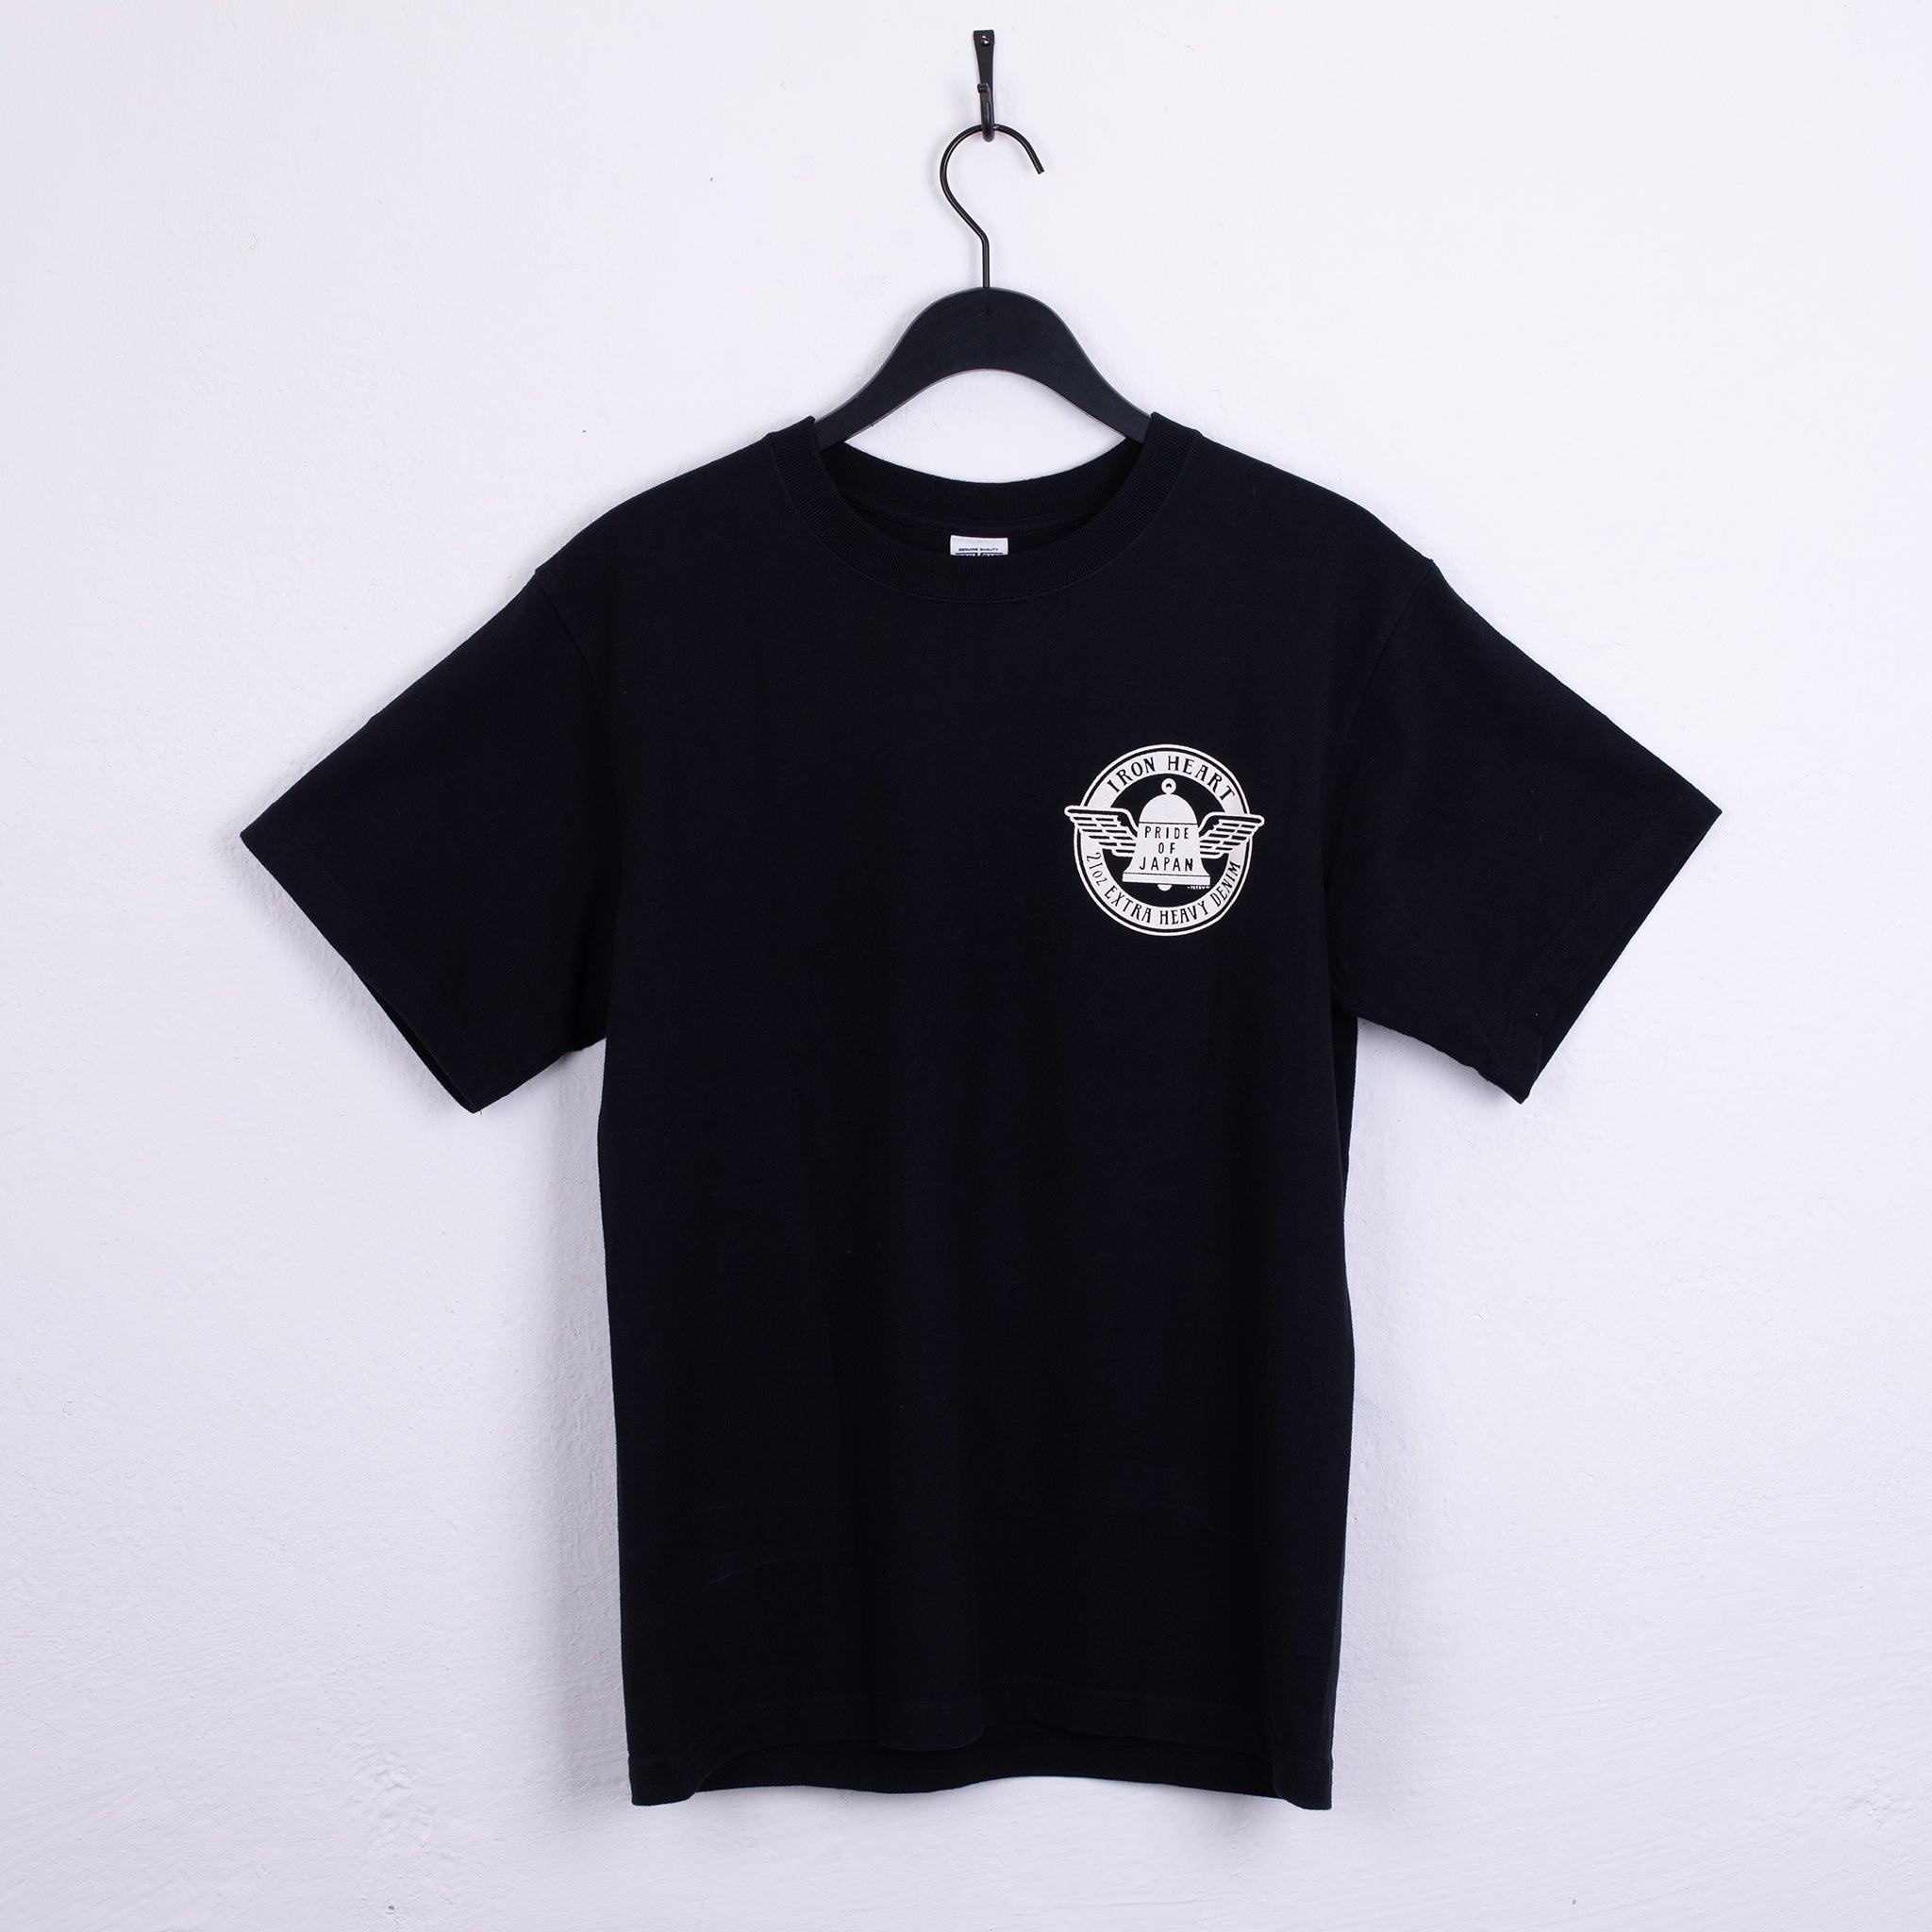 IHT-2101-BLK - Printed 7.5 oz Loopwheel Crew Neck T-Shirt - Black